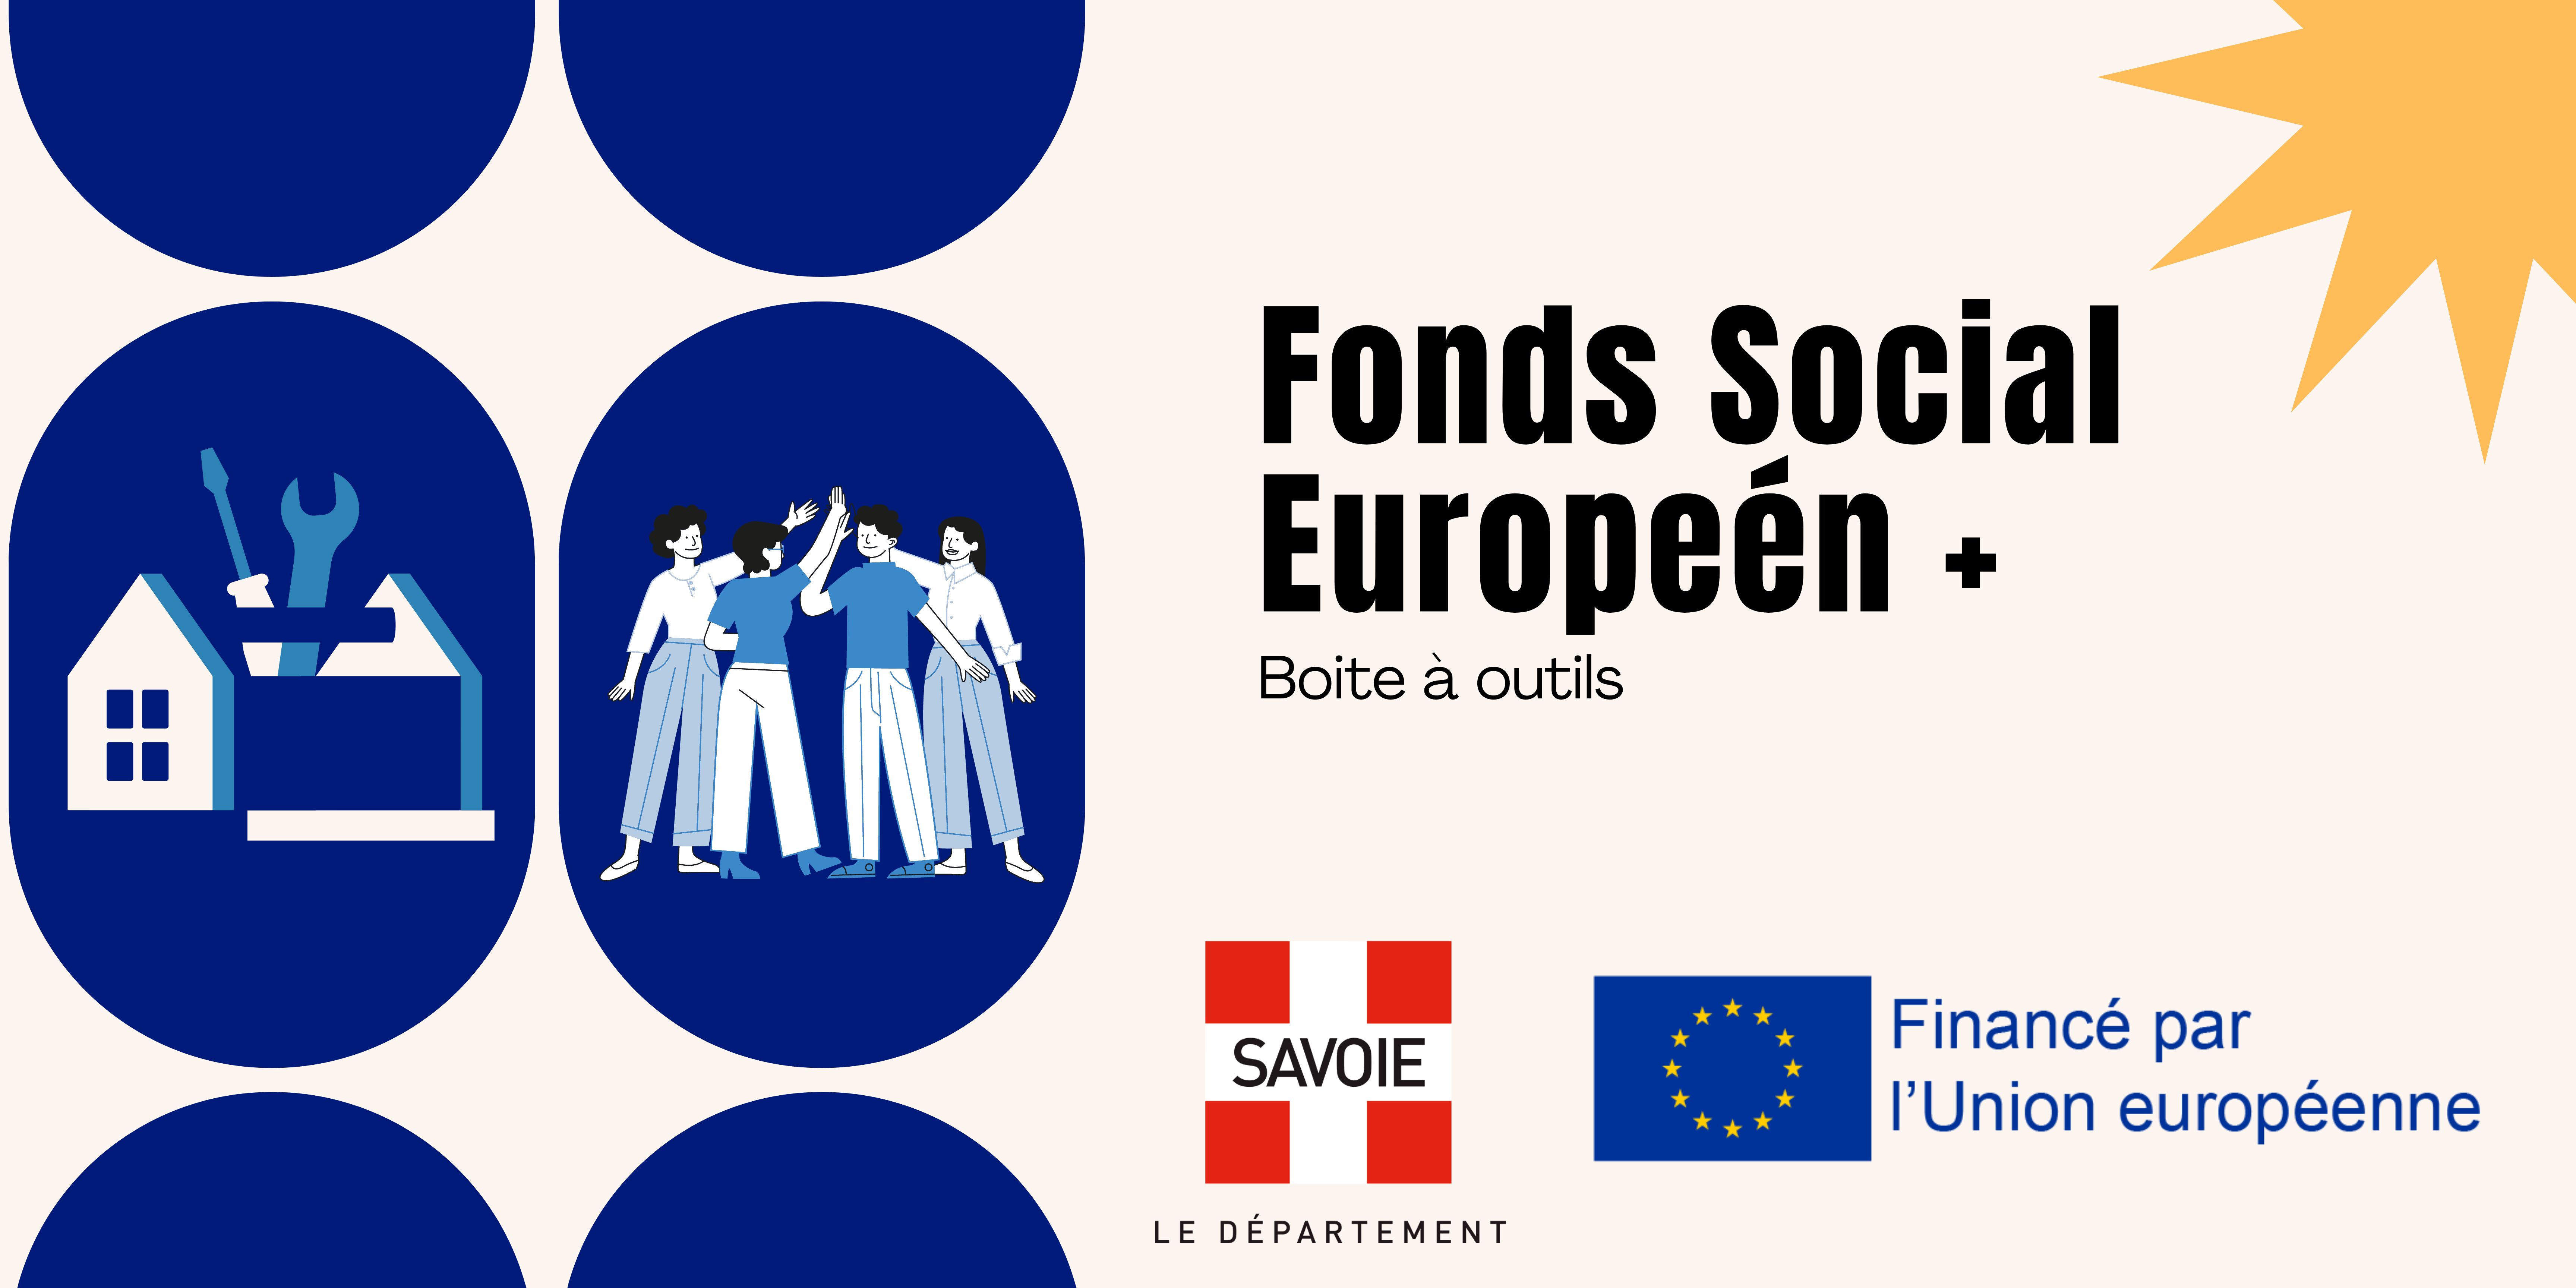 Boite à outils Fonds Social Europeén + (1)